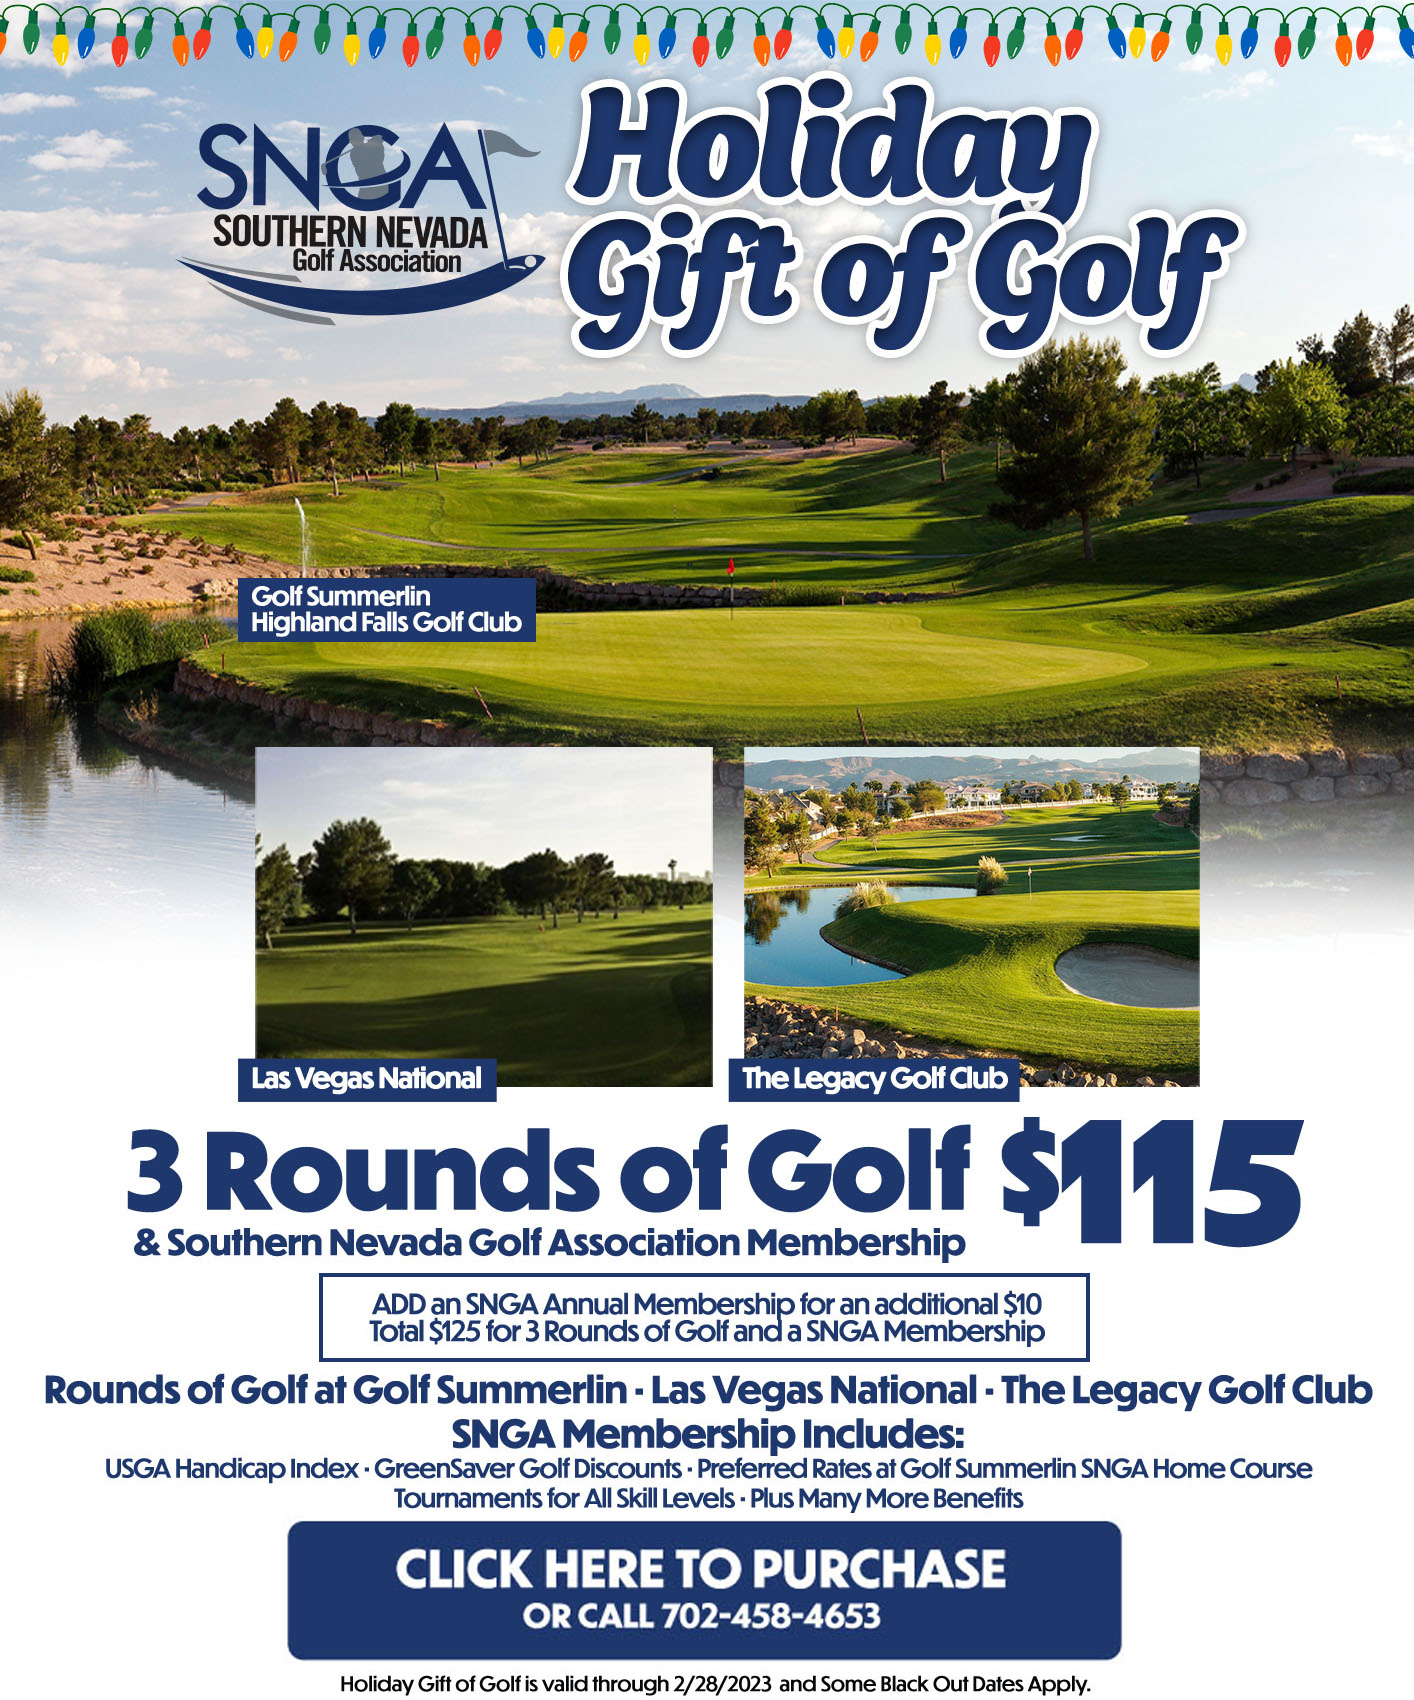 https://snga.org/wp-content/uploads/SNGA-Holiday-Gift-of-Golf-Landing-Page-1414x1700-v2.jpg